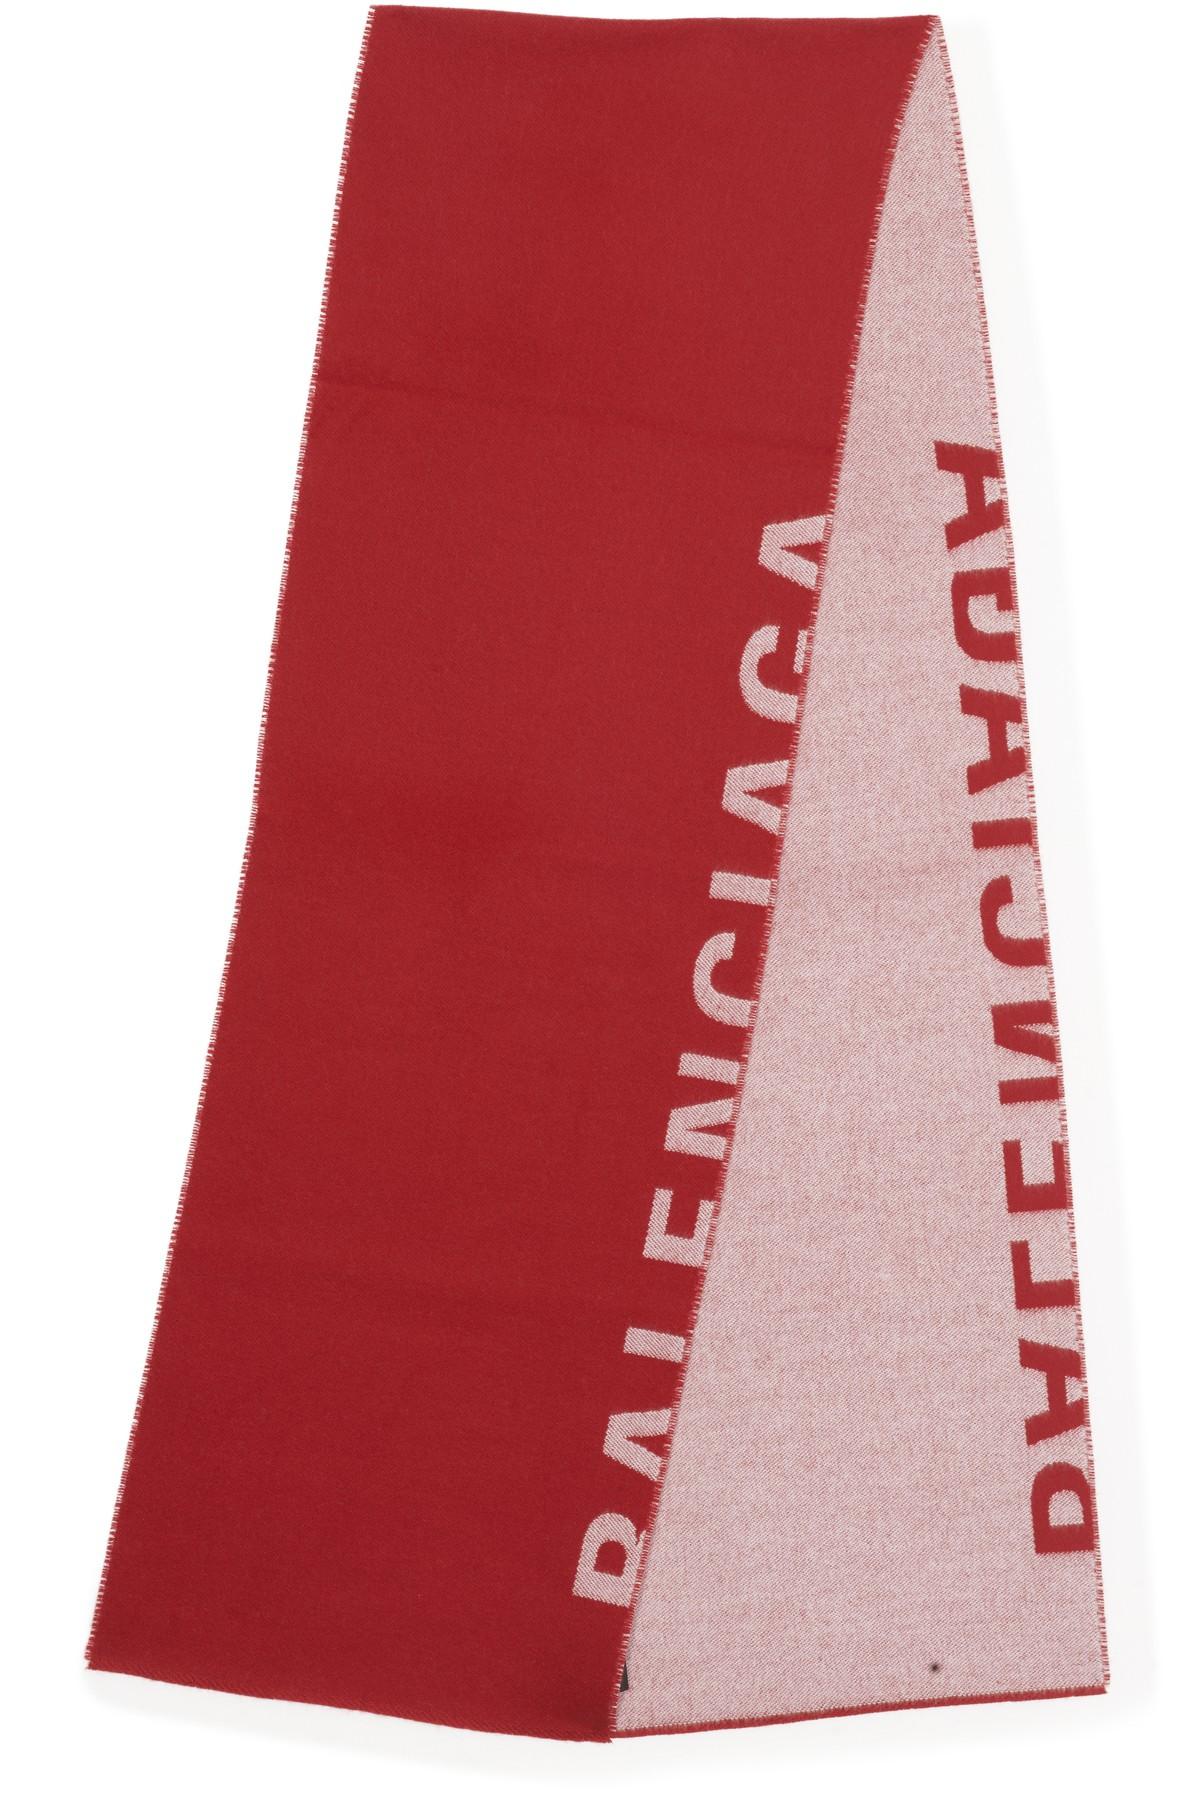 Balenciaga Wool Macro Logo Scarf in Red for Men - Lyst